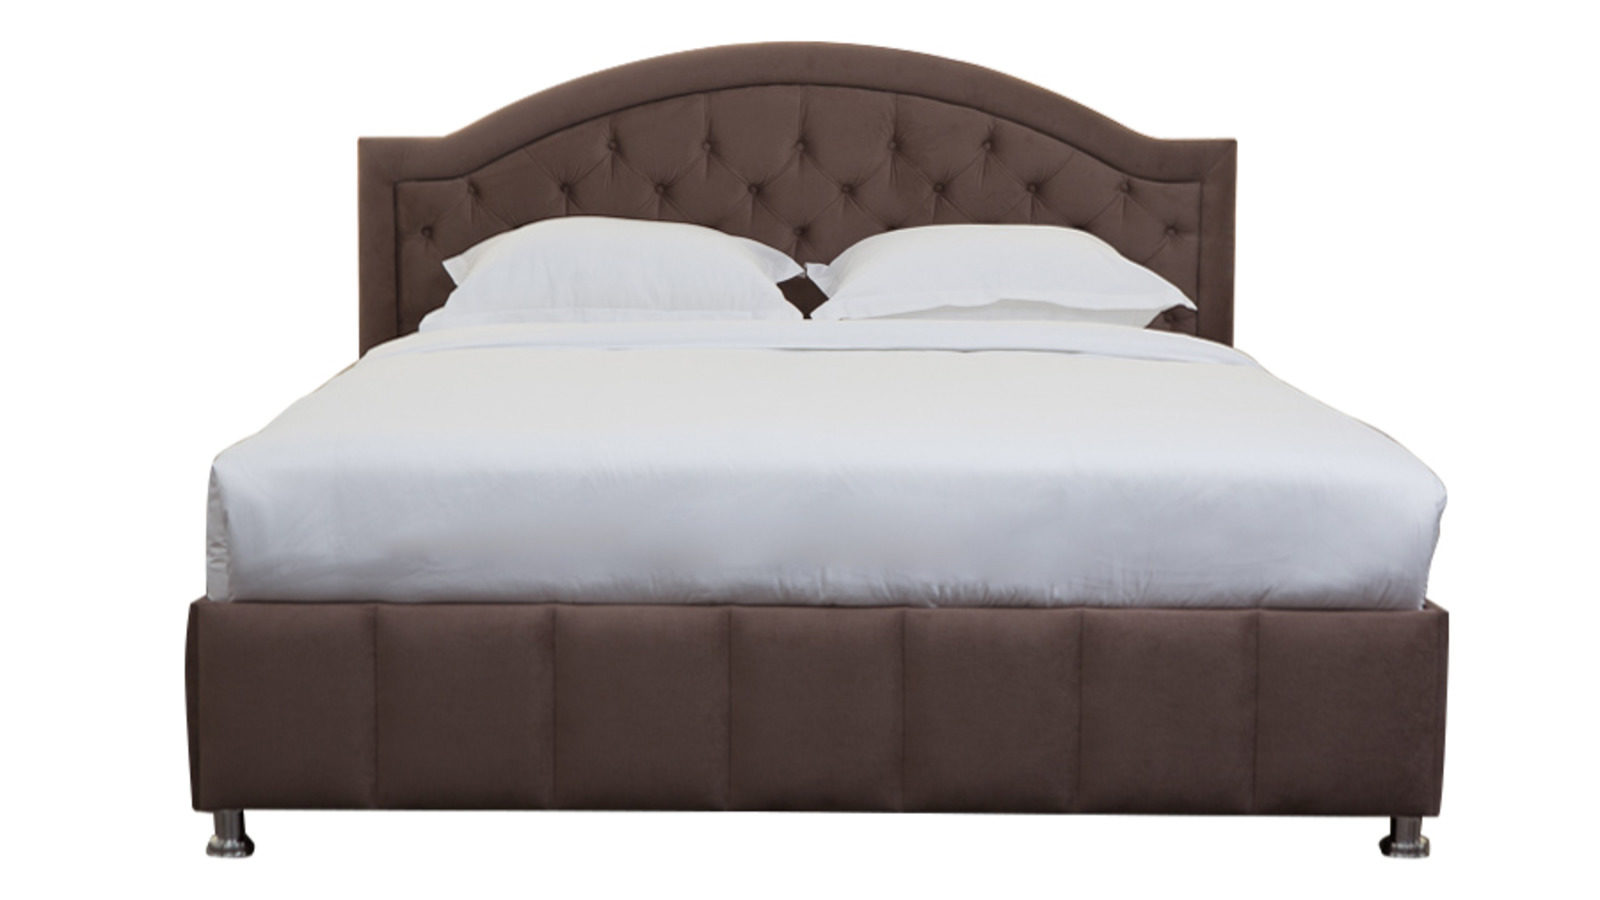 Аскона мебель кровати. Кровать Афина Аскона. Кровать Afina Ascona. Кровать Carolina Аскона 160*200. Кровать Аскона 160х200.